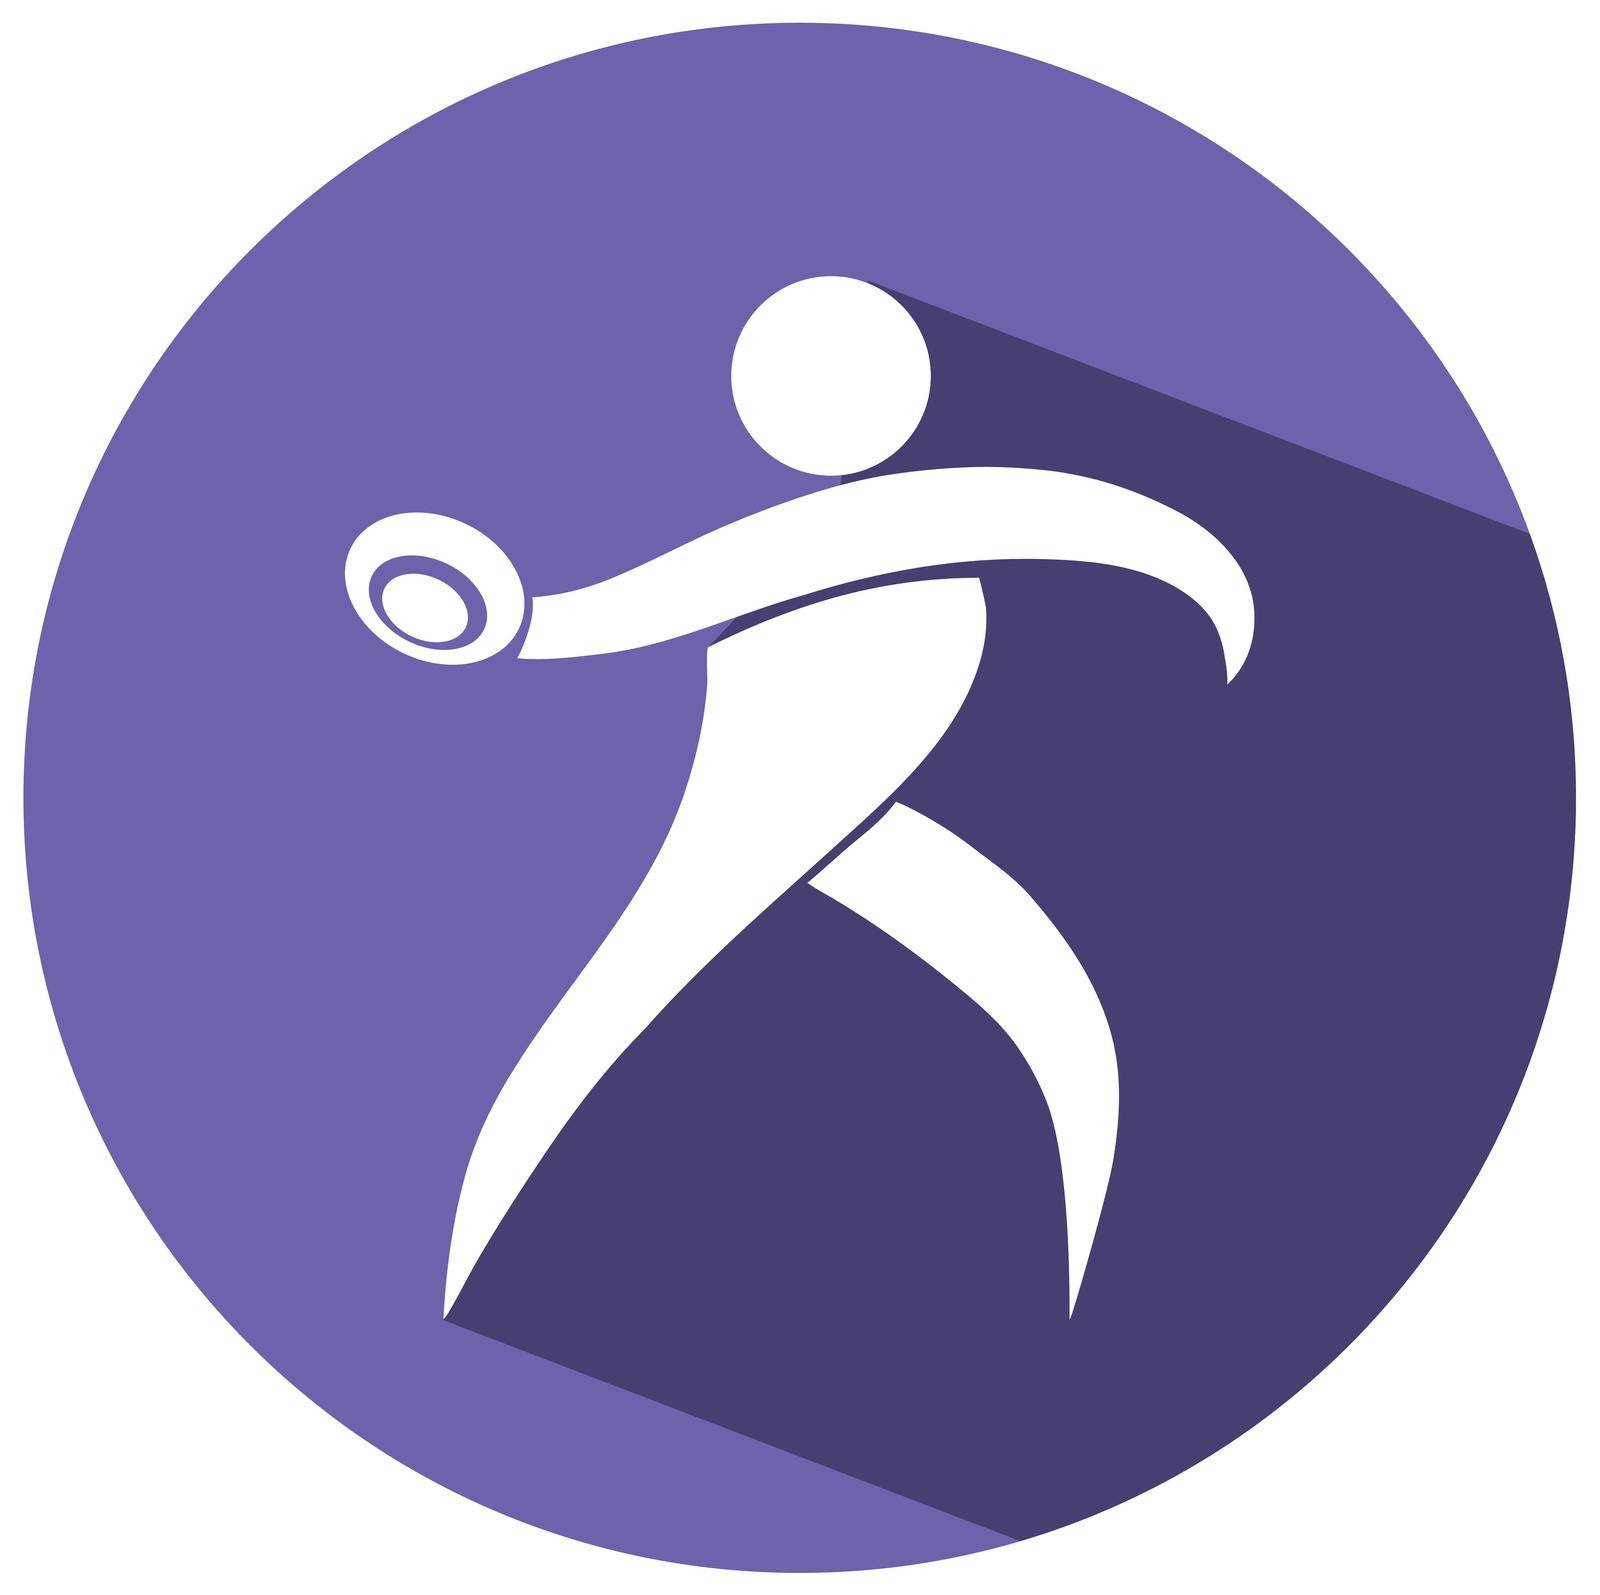 Sport icon design for discus on purple badge illustration